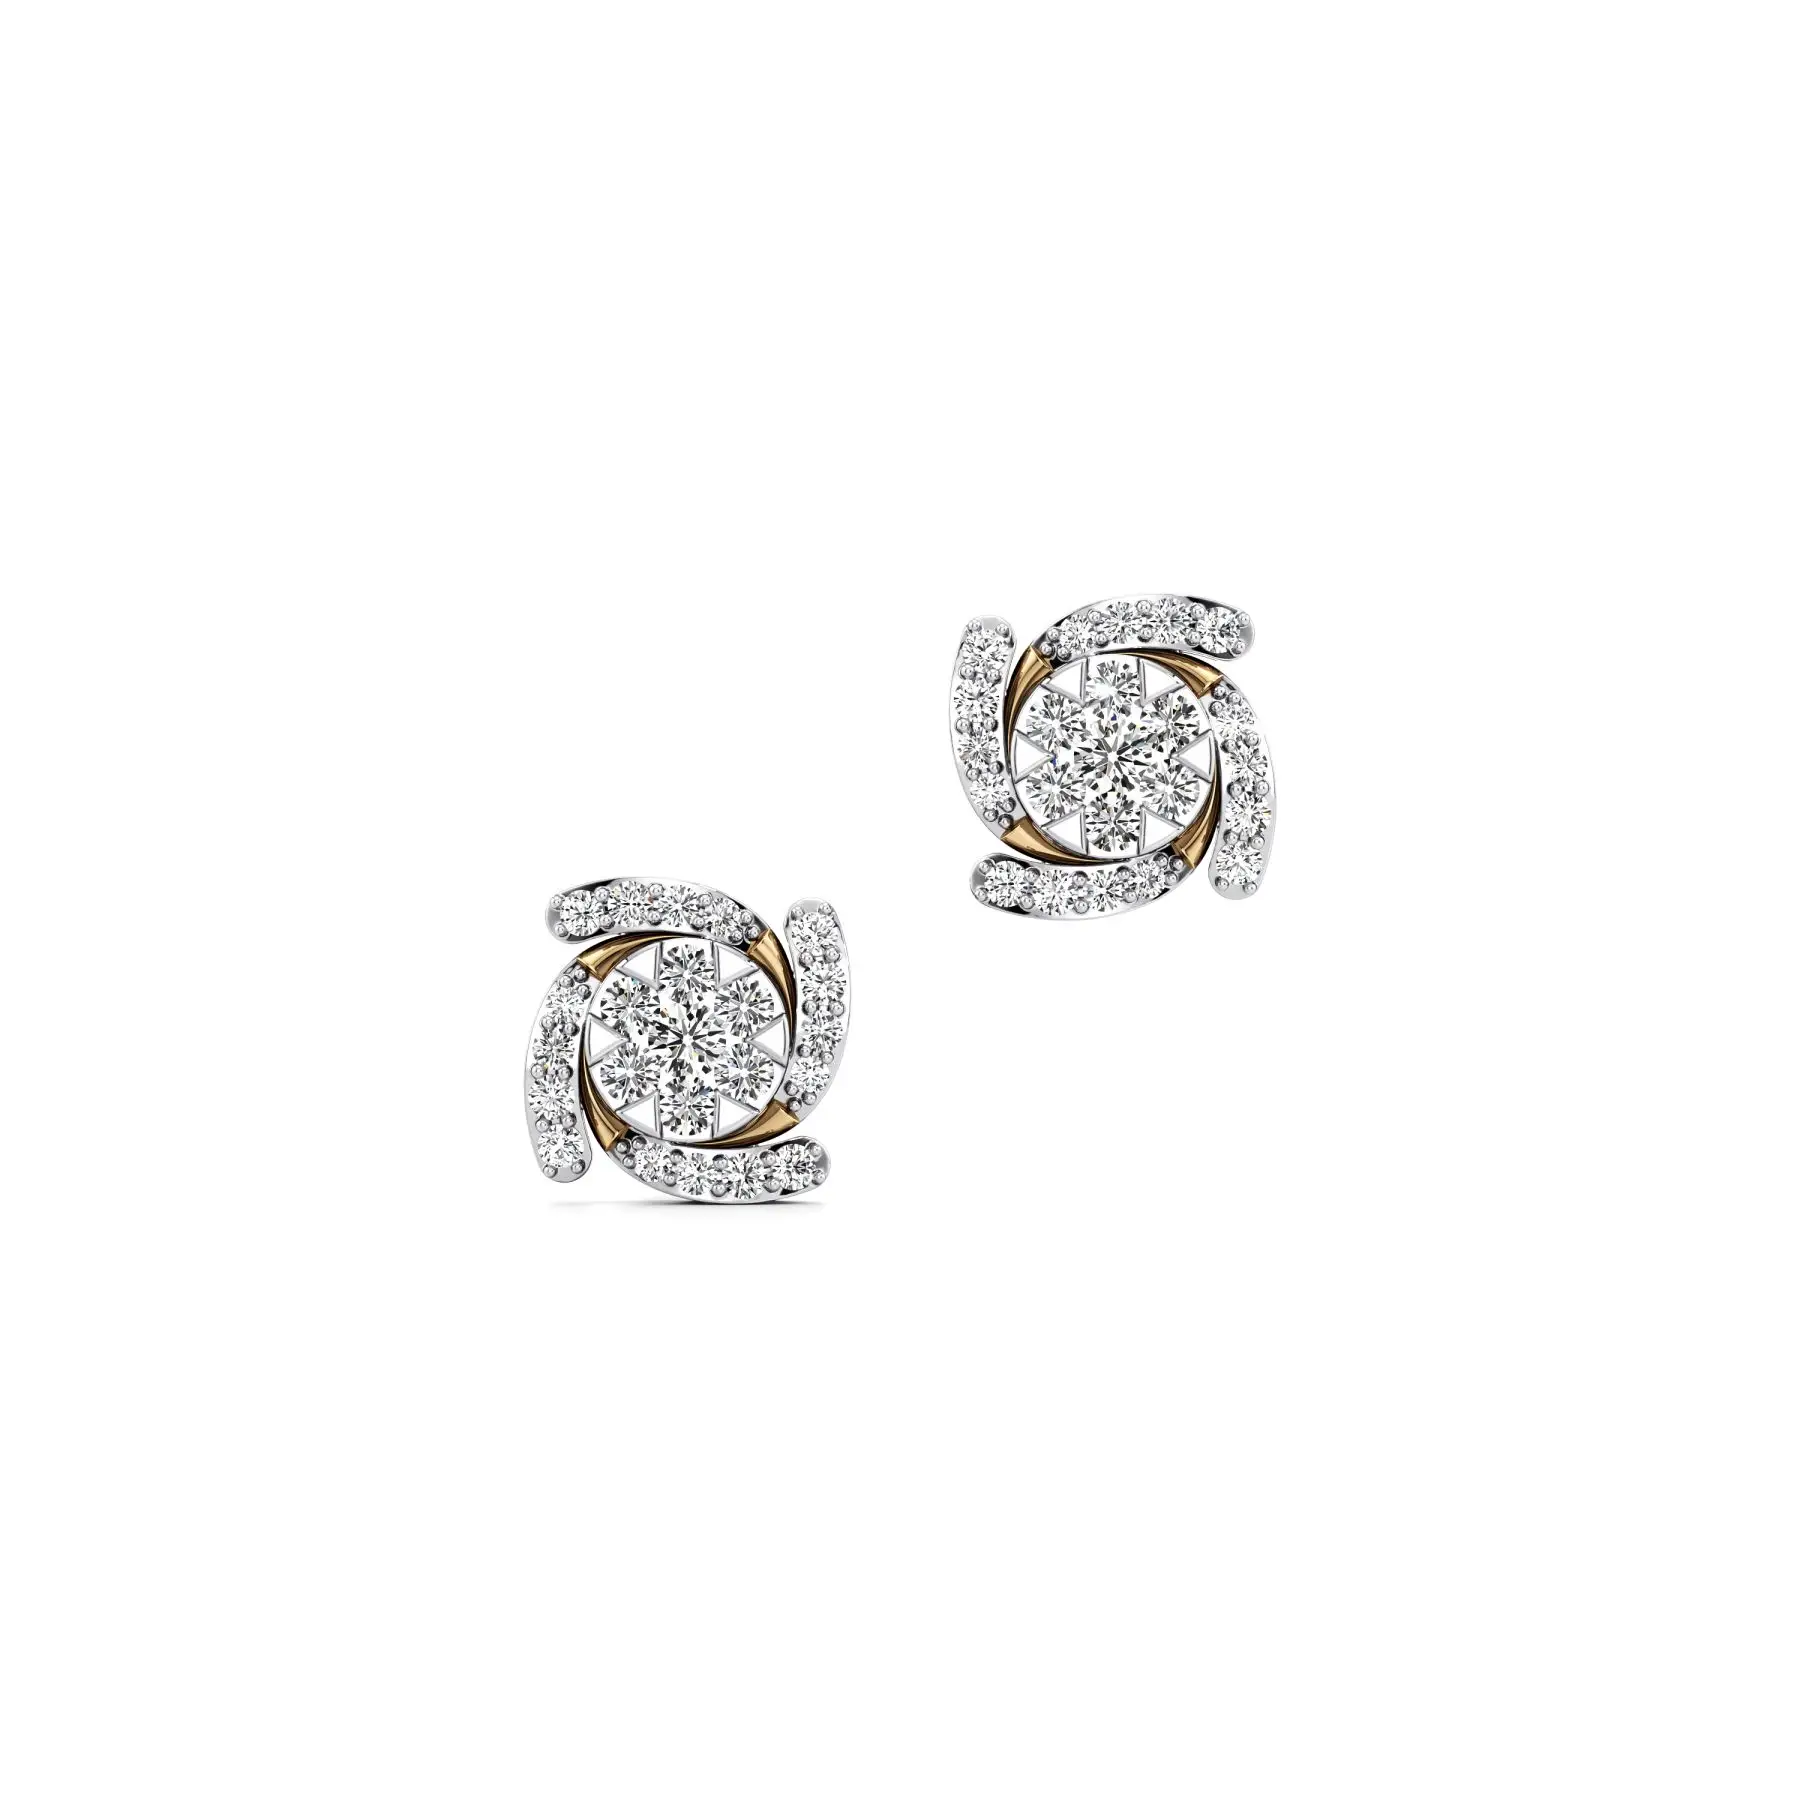 Starry Spinner Diamond Earrings in Yellow 10k Gold